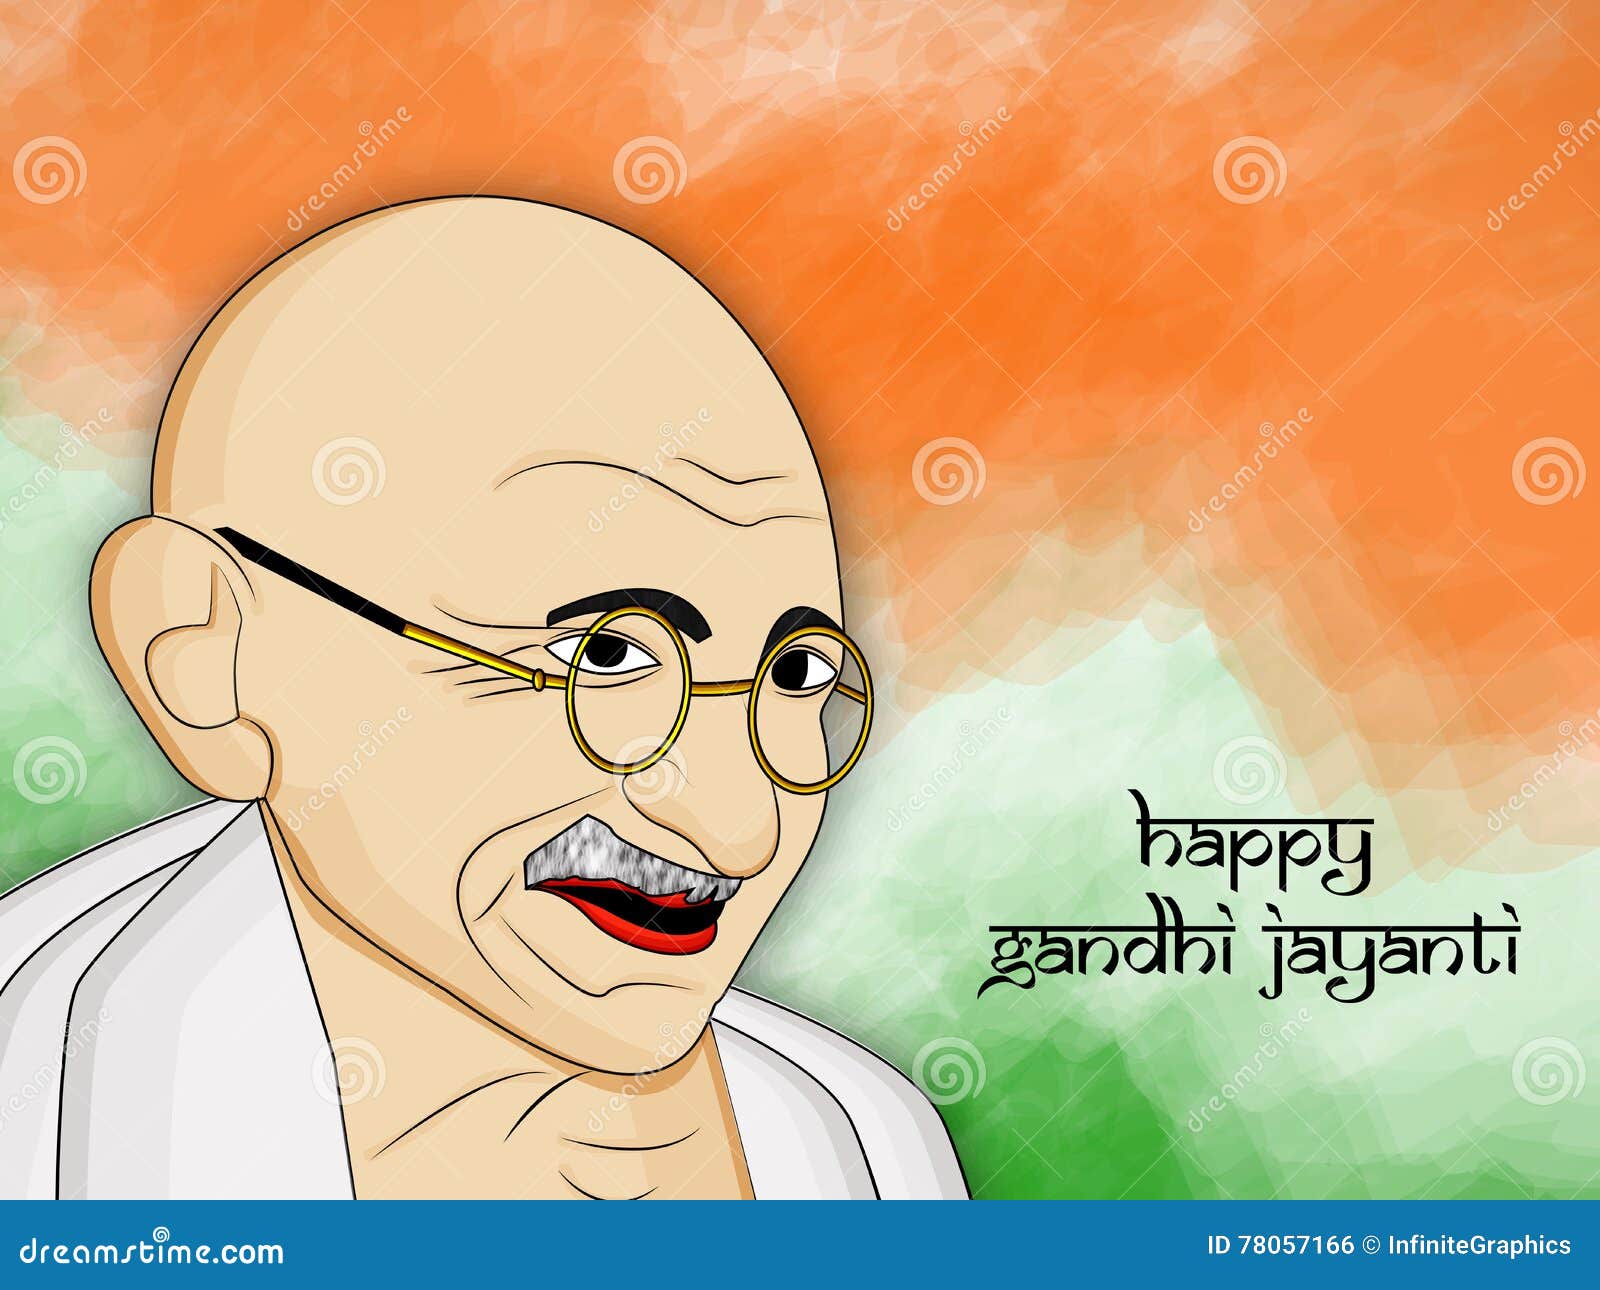 Gandhi Jayanti background stock vector. Illustration of august - 78057166